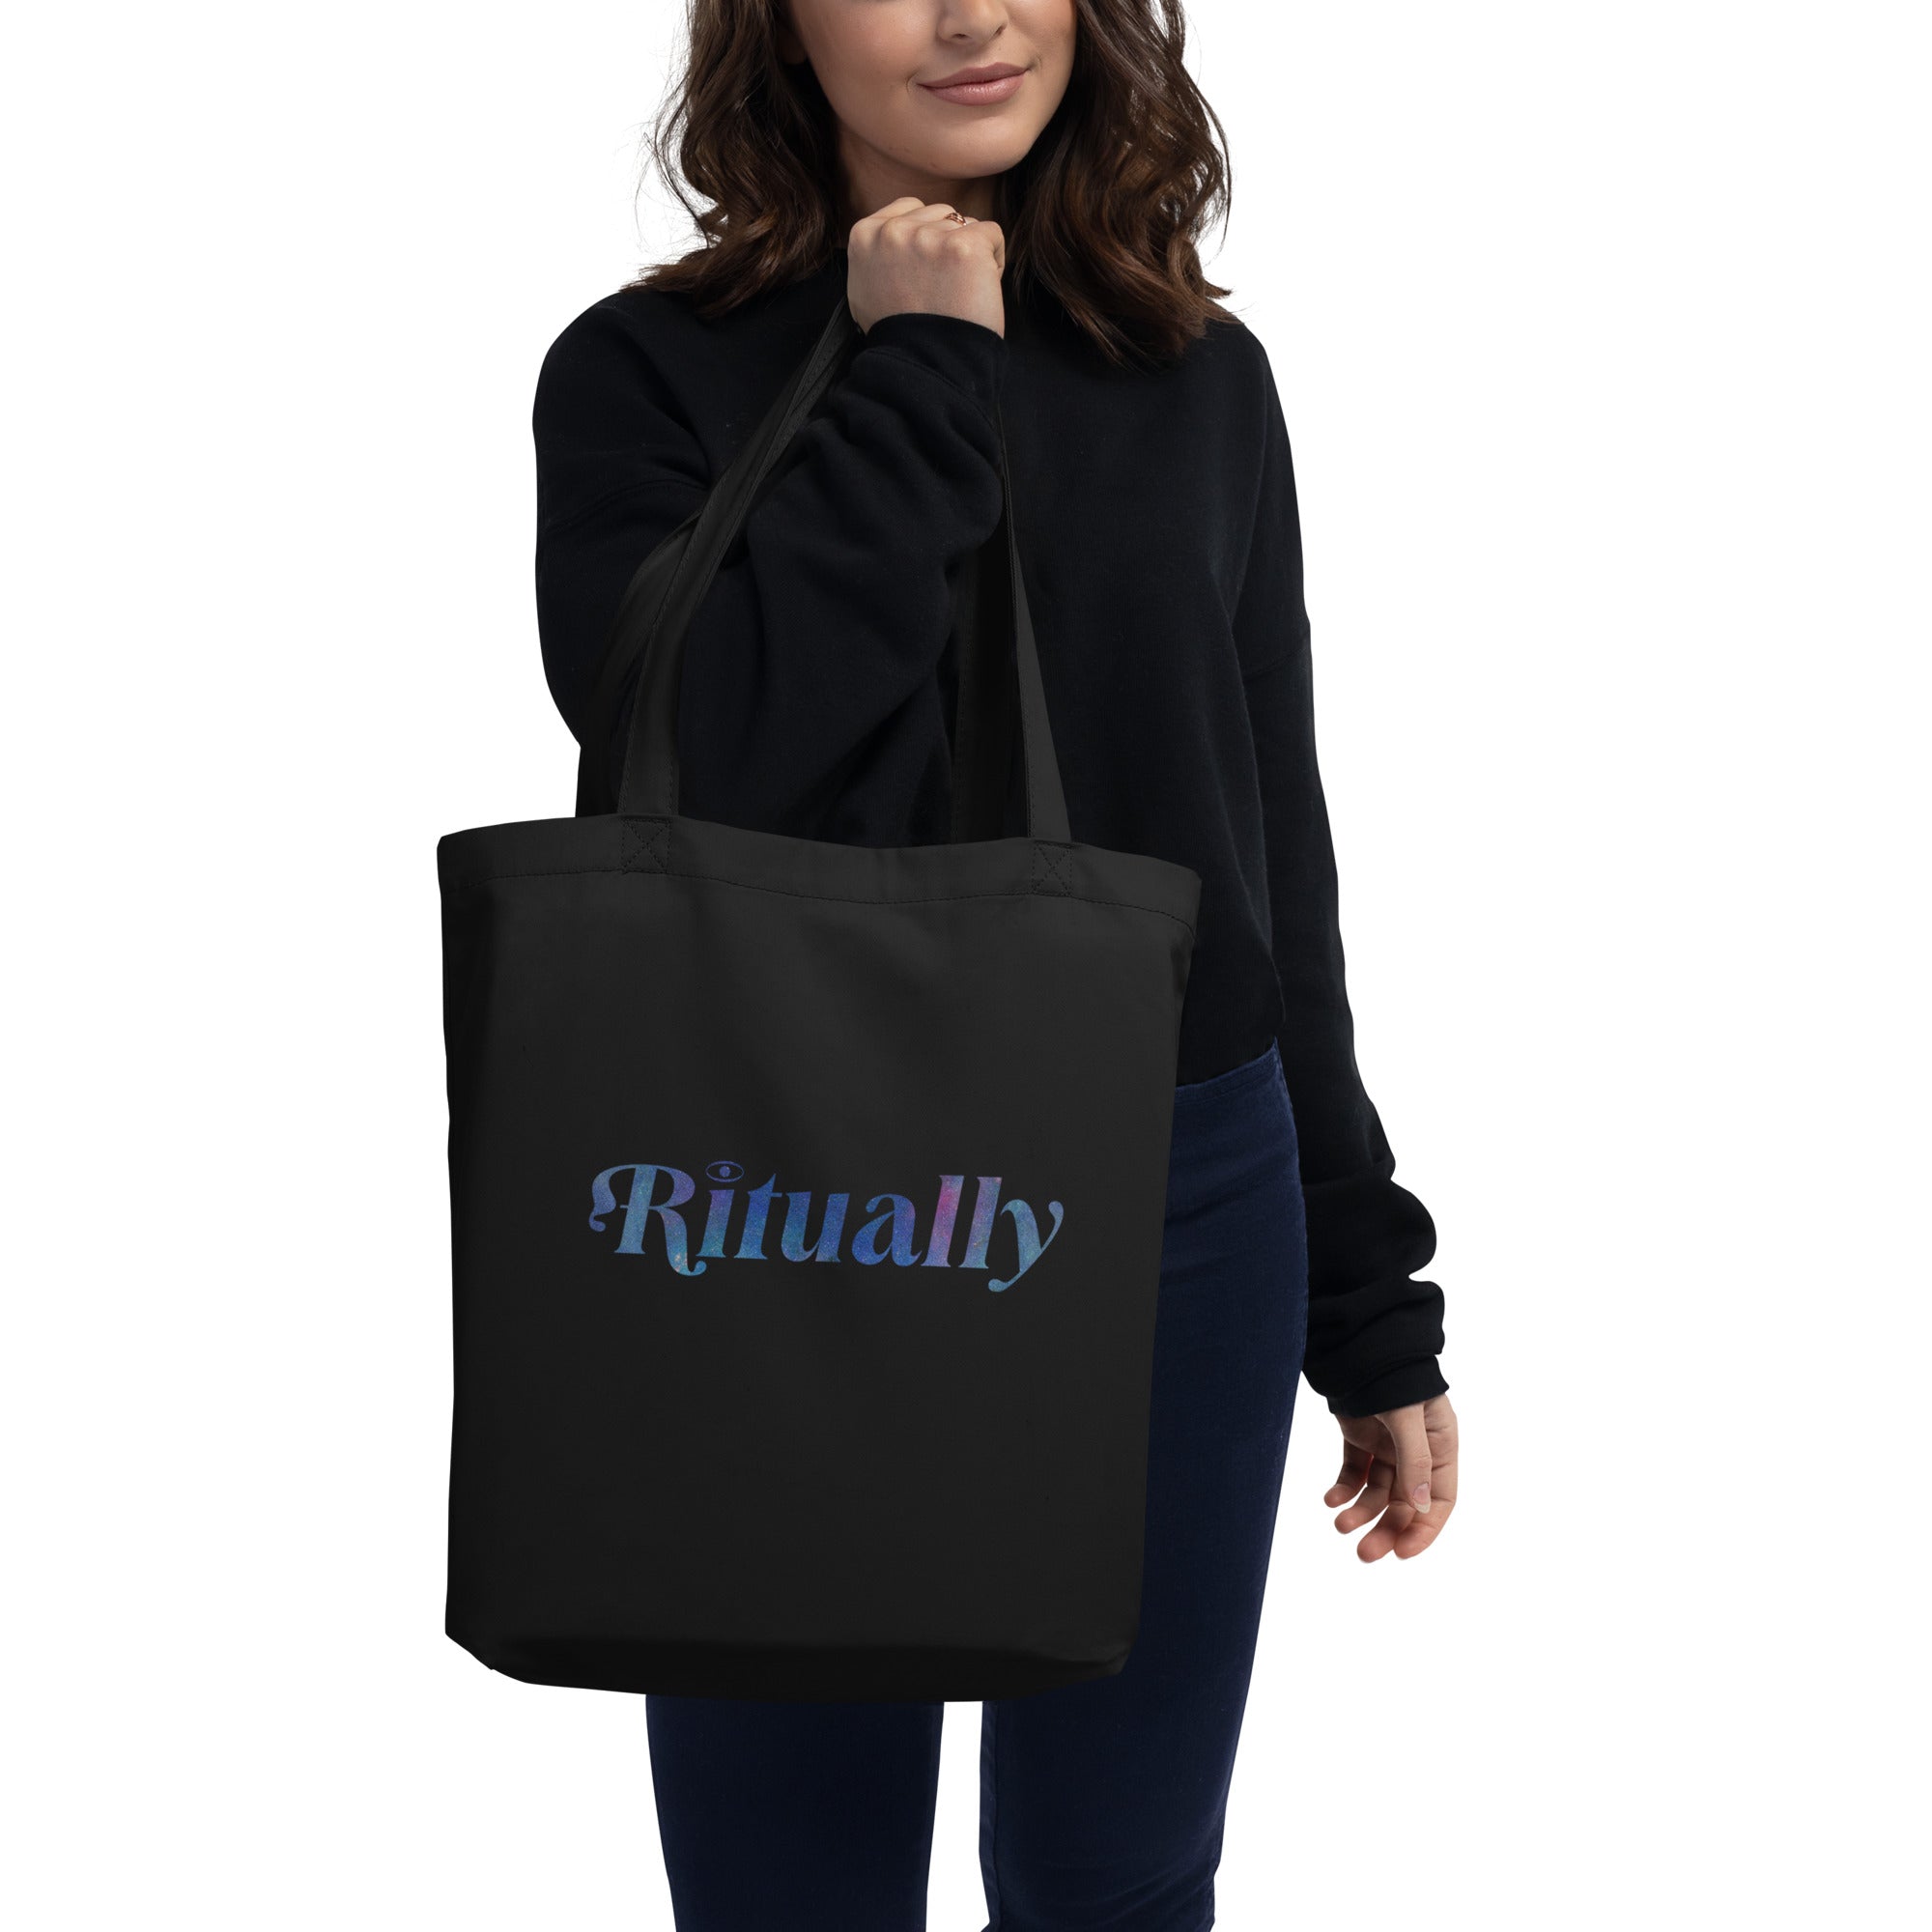 Ritually Eco Tote Bag